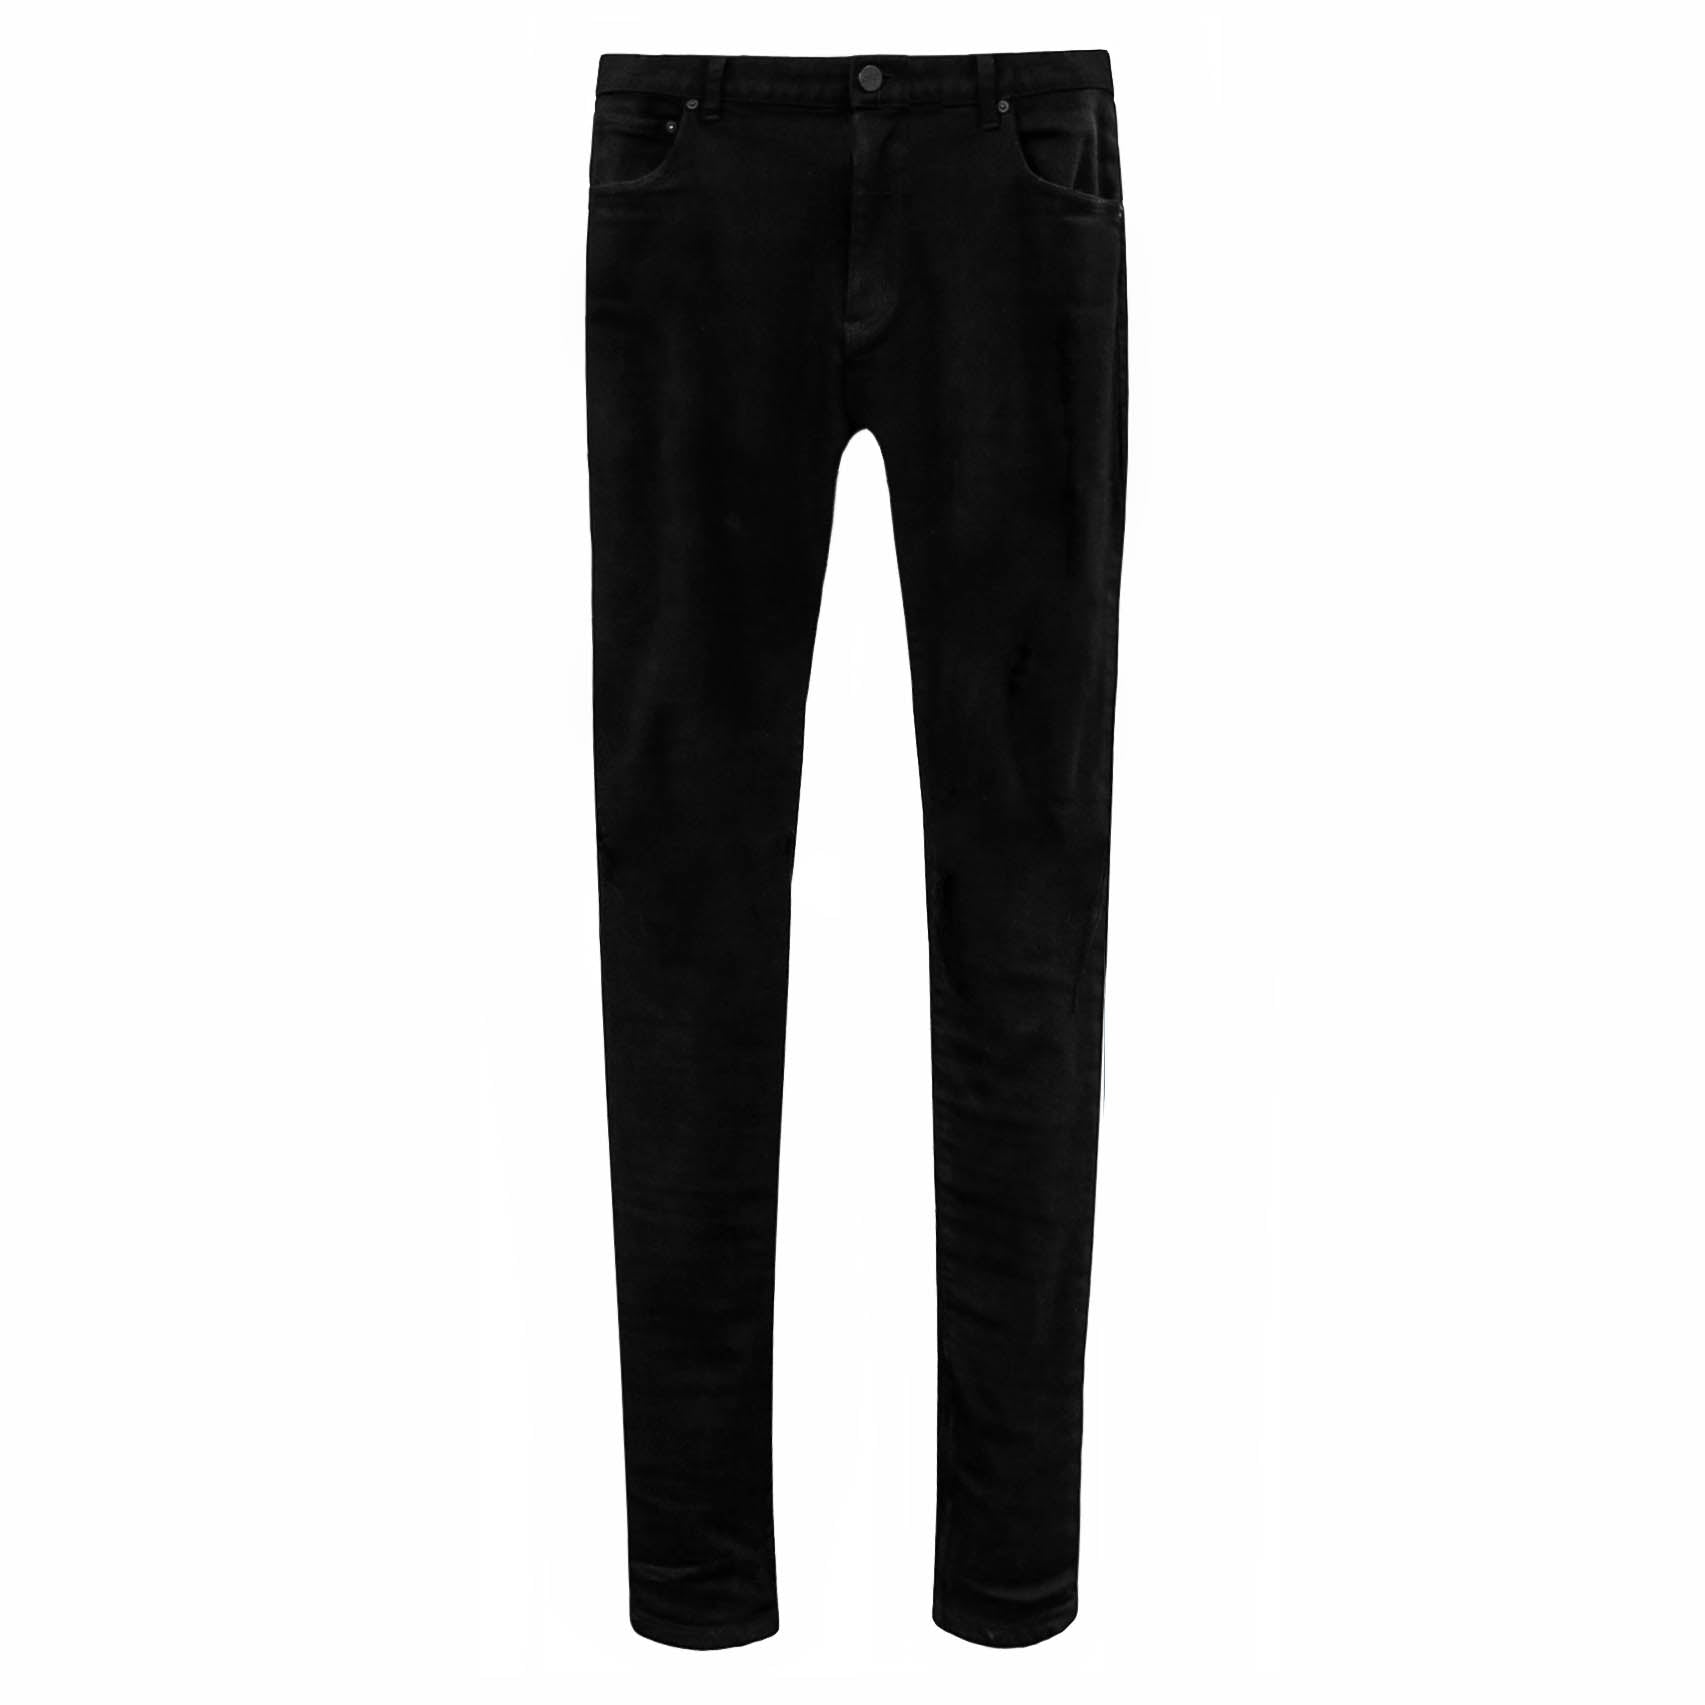 Denim Jeans Black Color Strech (Delave) Size 38